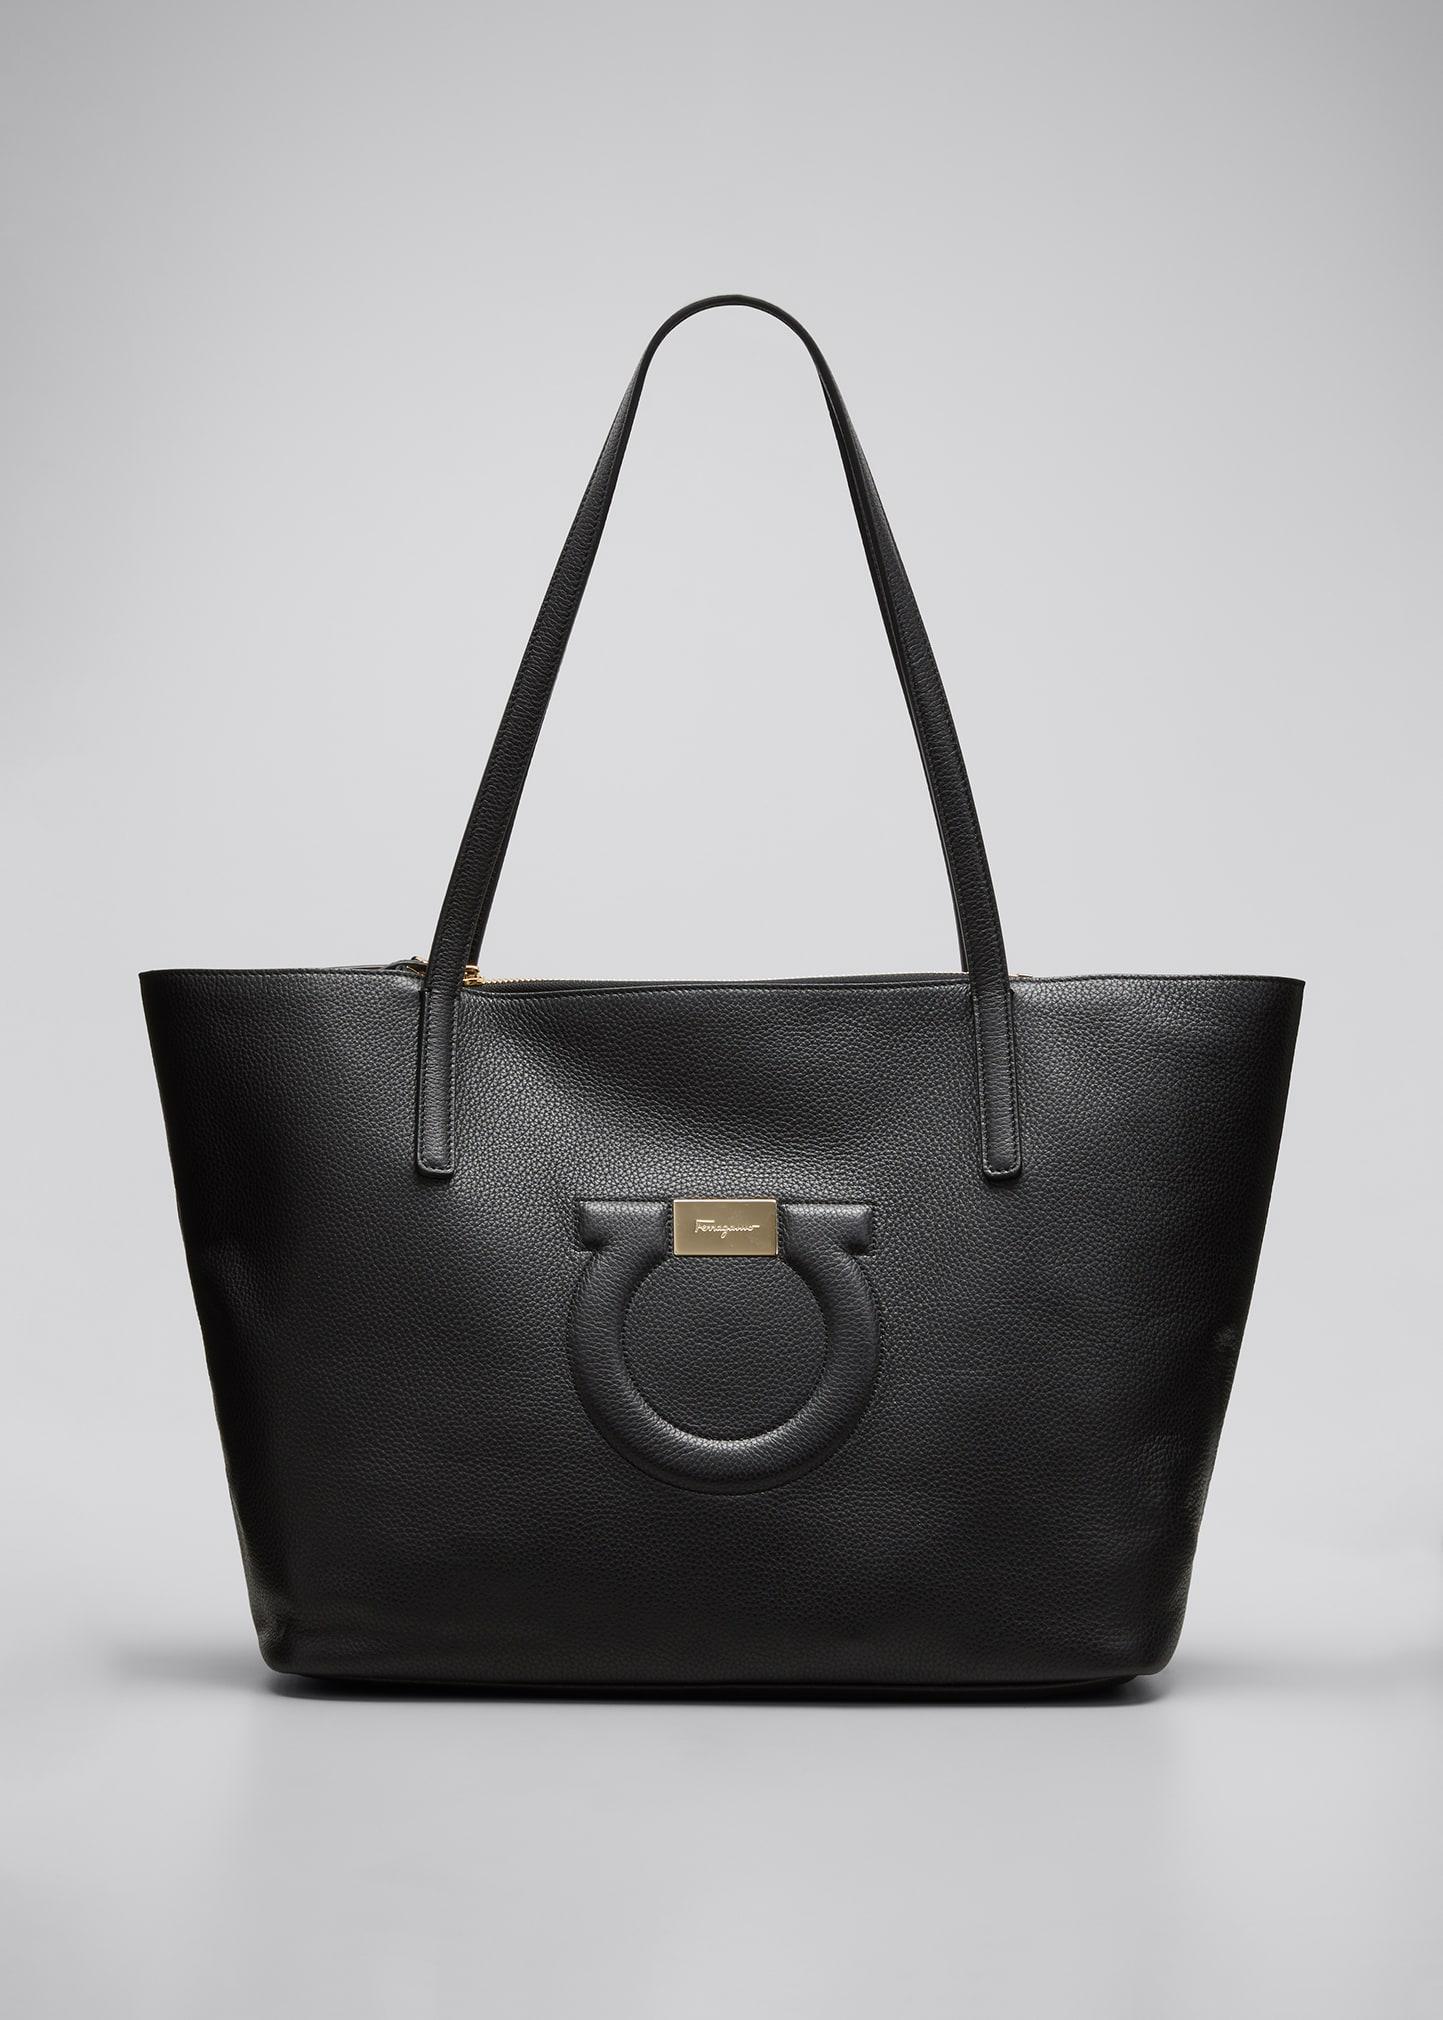 Ferragamo City Medium Leather Shoulder Tote Bag in Black | Lyst